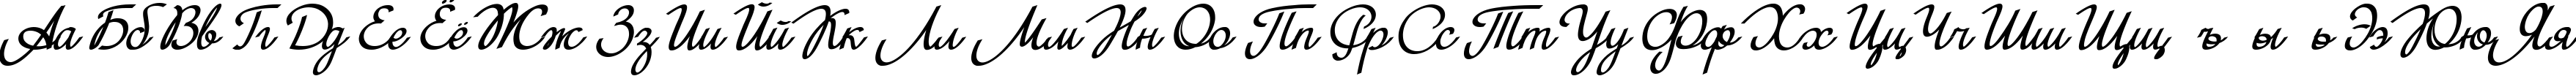 Пример написания русского алфавита шрифтом Mini